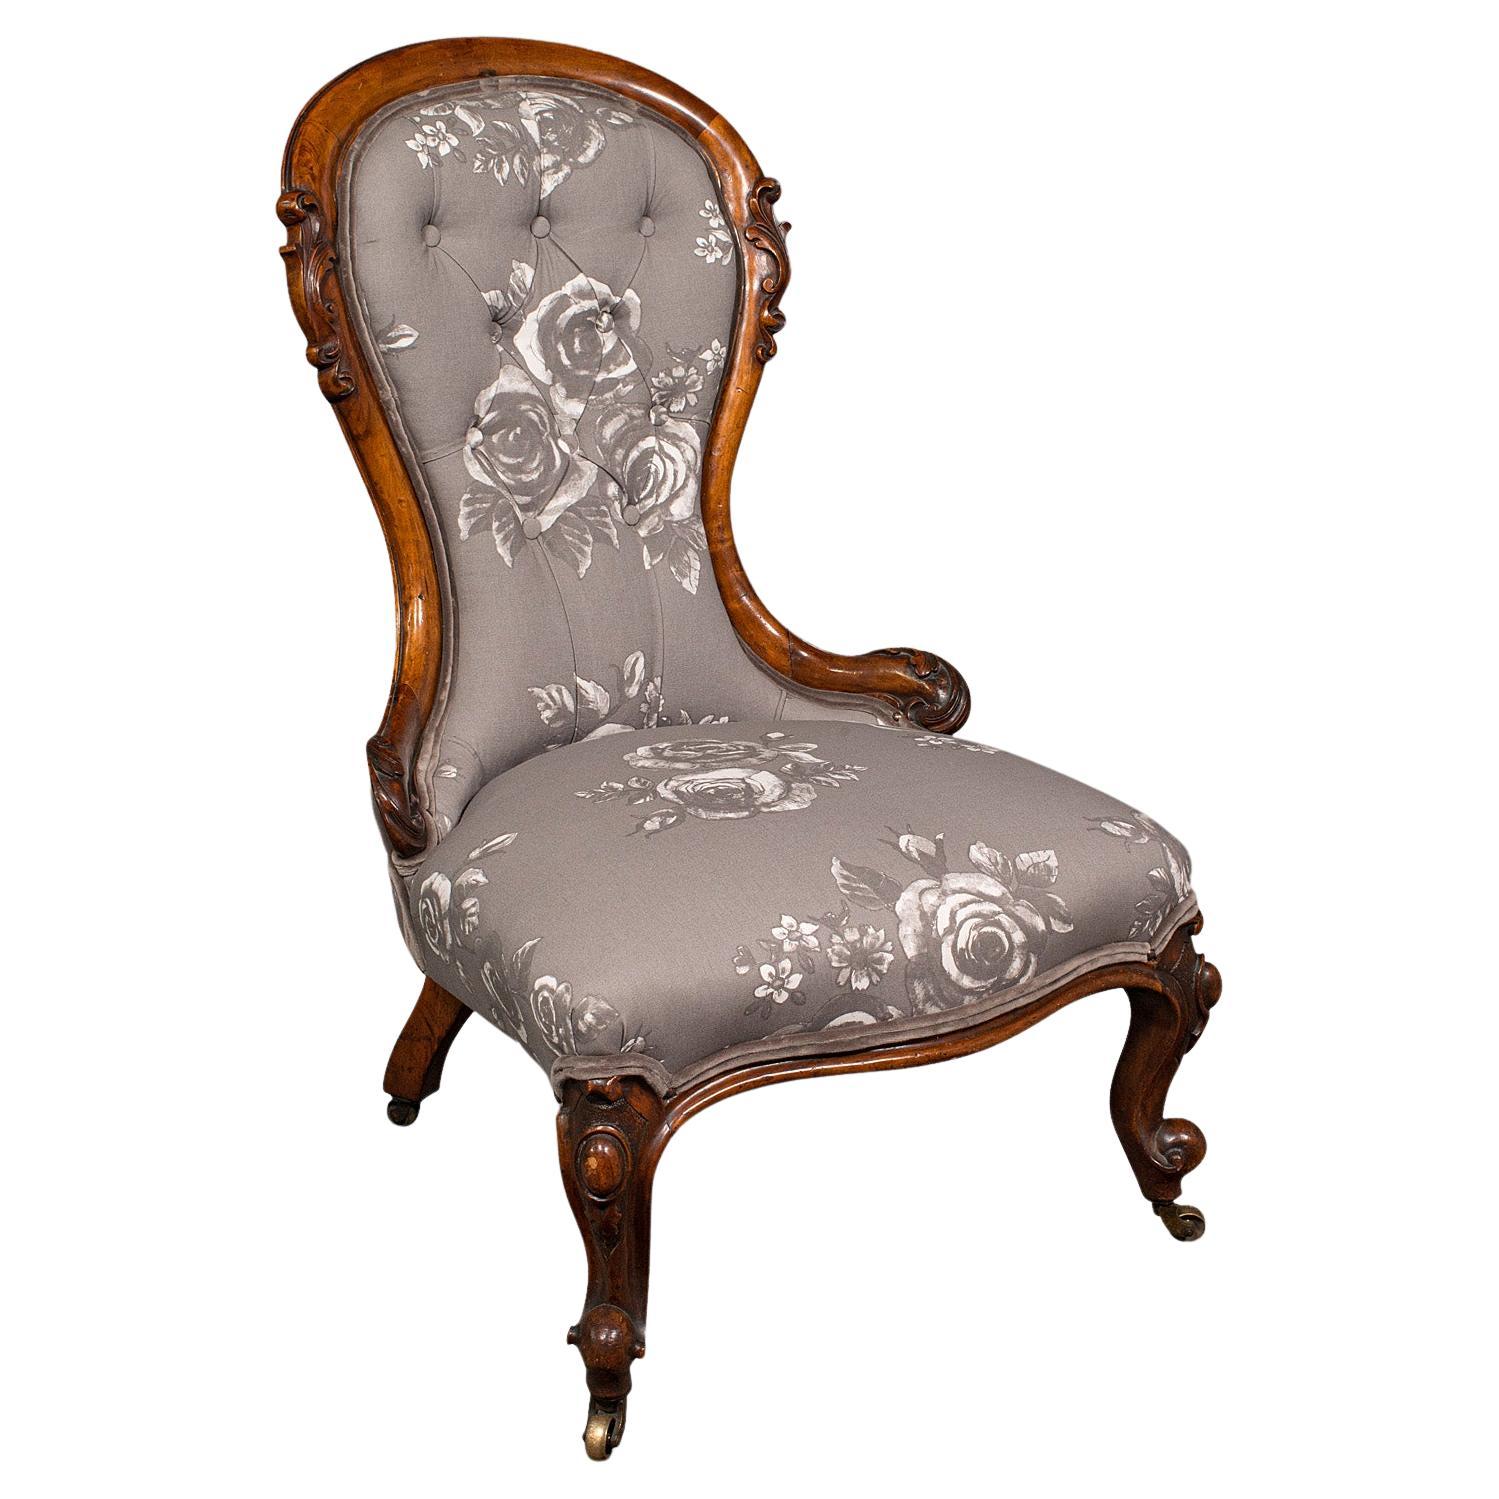 Antique Button Back Salon Chair English Walnut Spoon Seat Victorian circa 1840